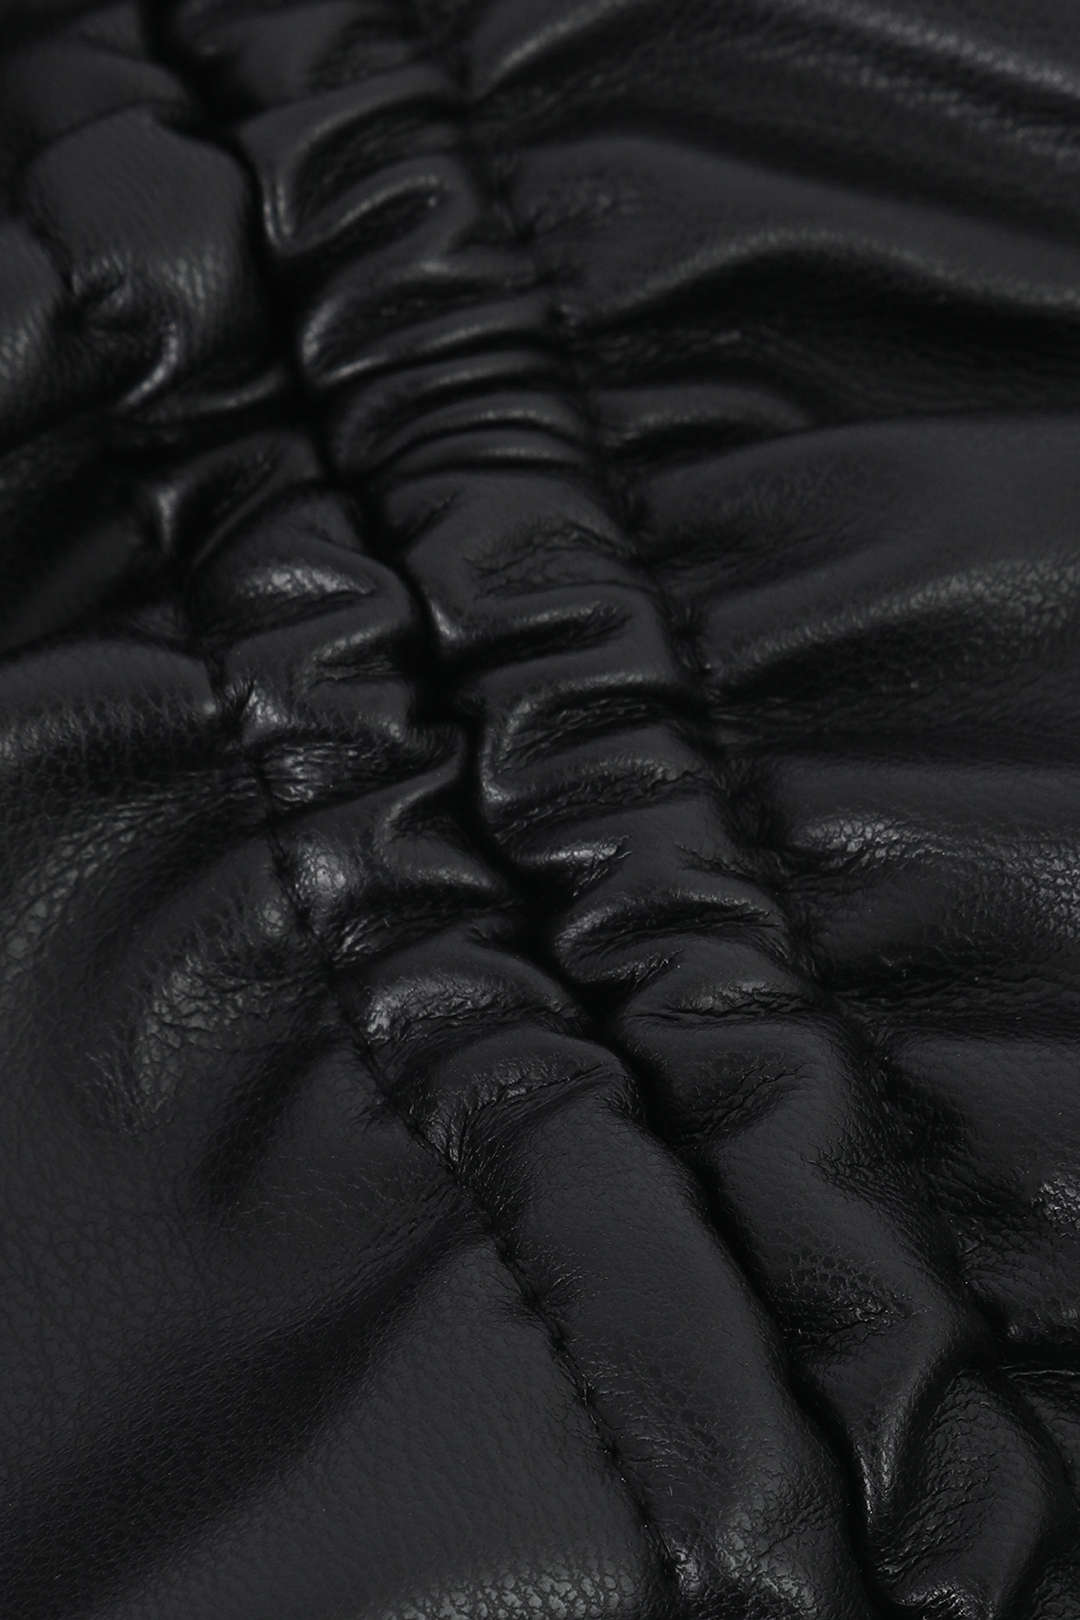 Drawstring Slit Leather Mini Skirt